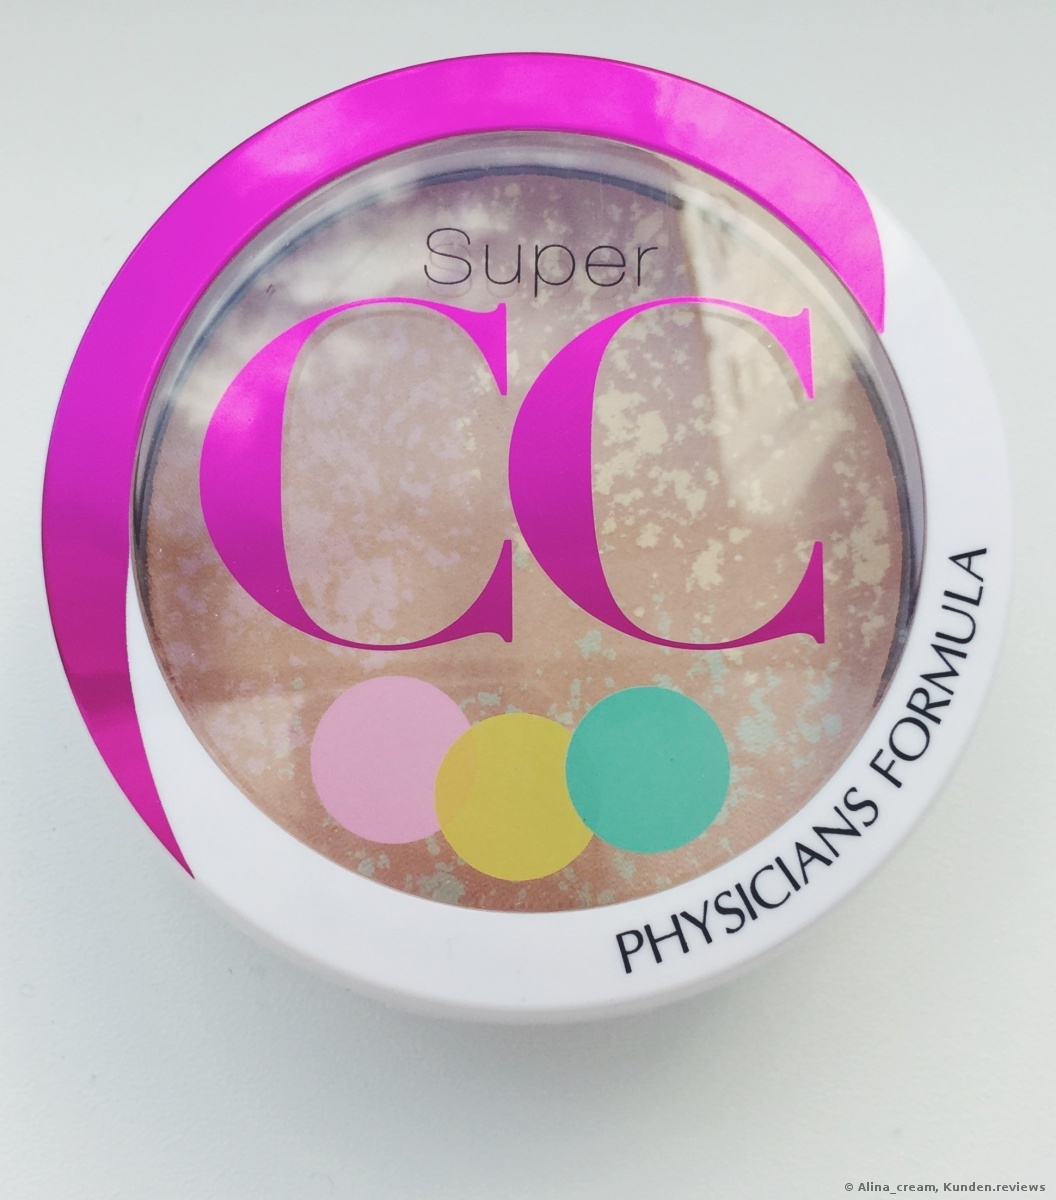 Super CC Color-Correction + Care CC Powder SPF 30 von Physicians Formula